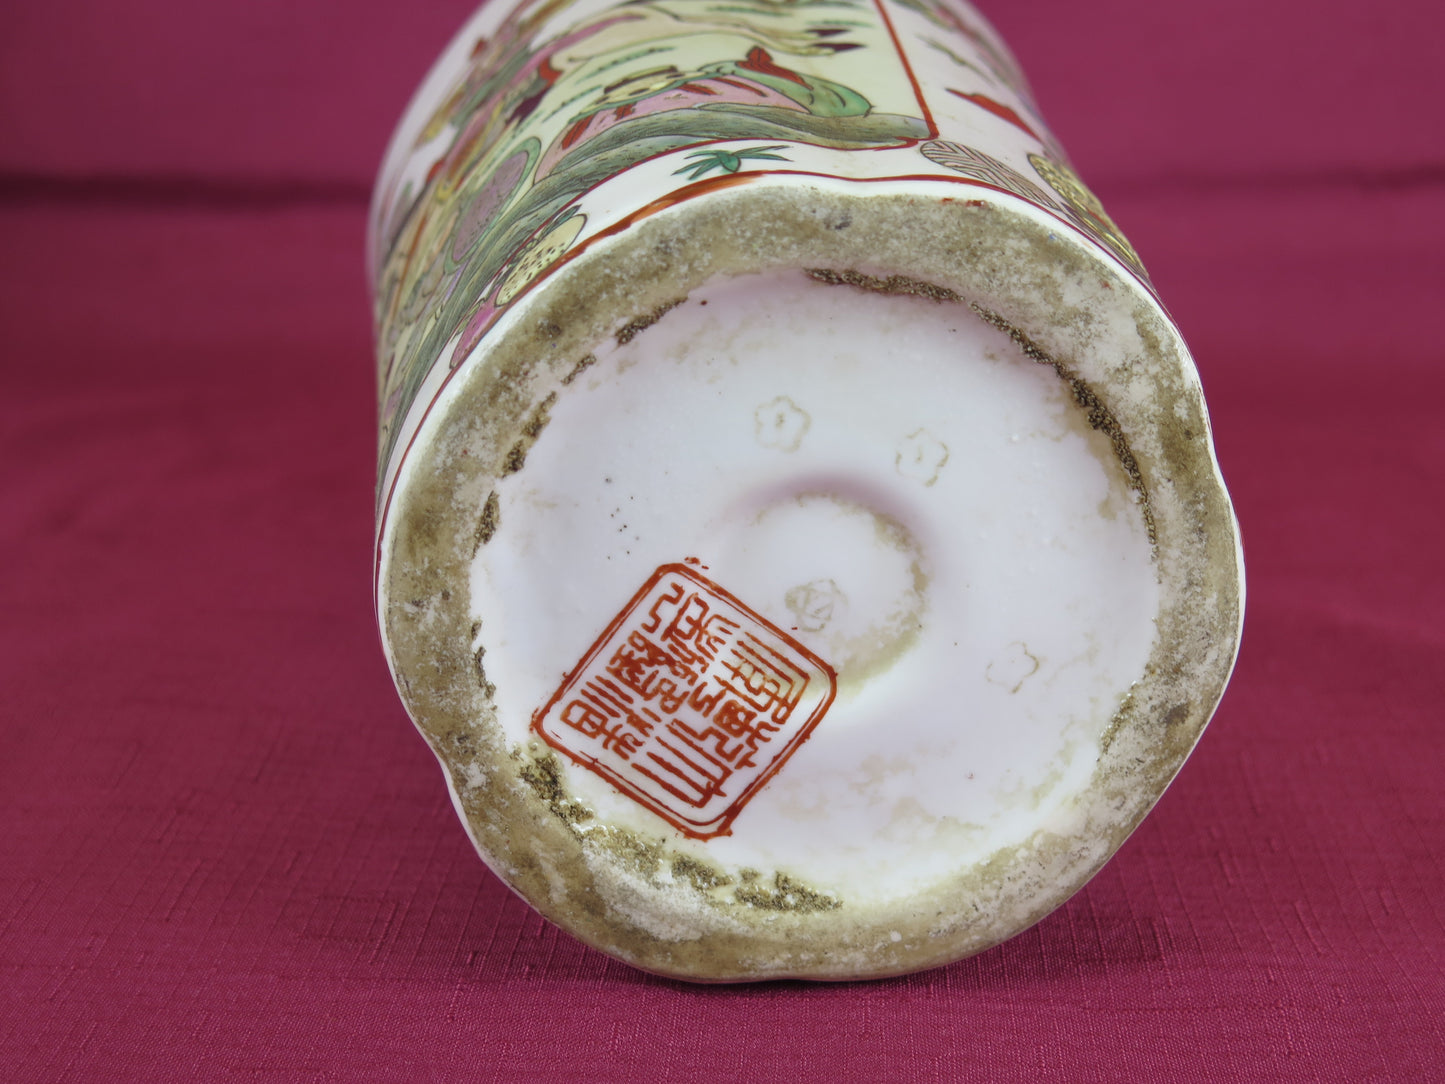 Vintage Chinese ceramic vase hand painted home decoration flower vase CM4